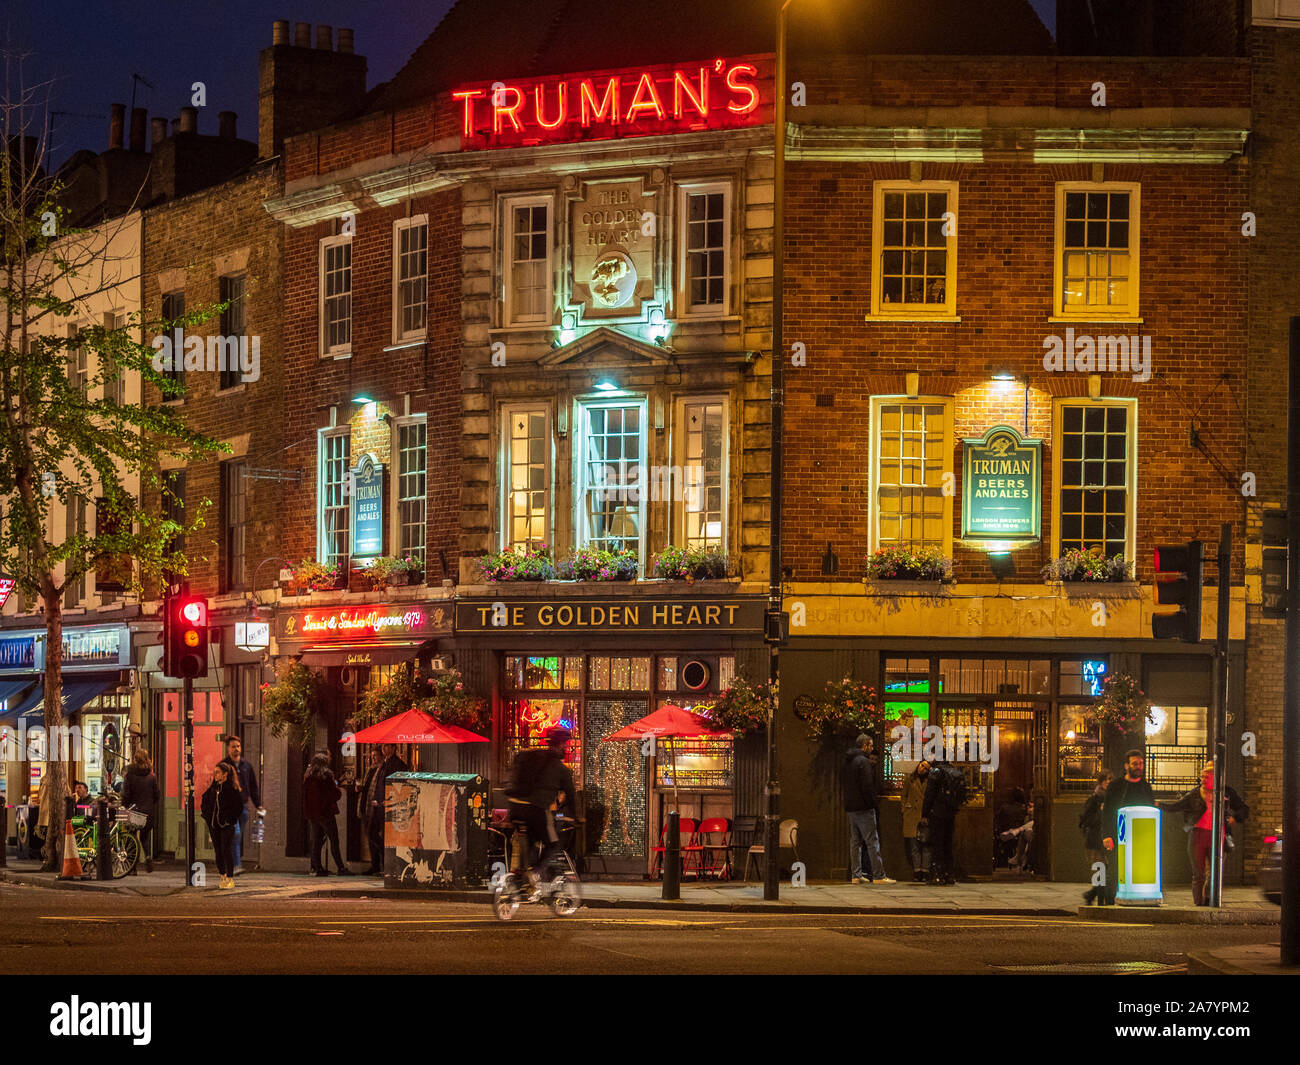 The Golden Heart Truman's Pub in Spitalfields East London Stock Photo